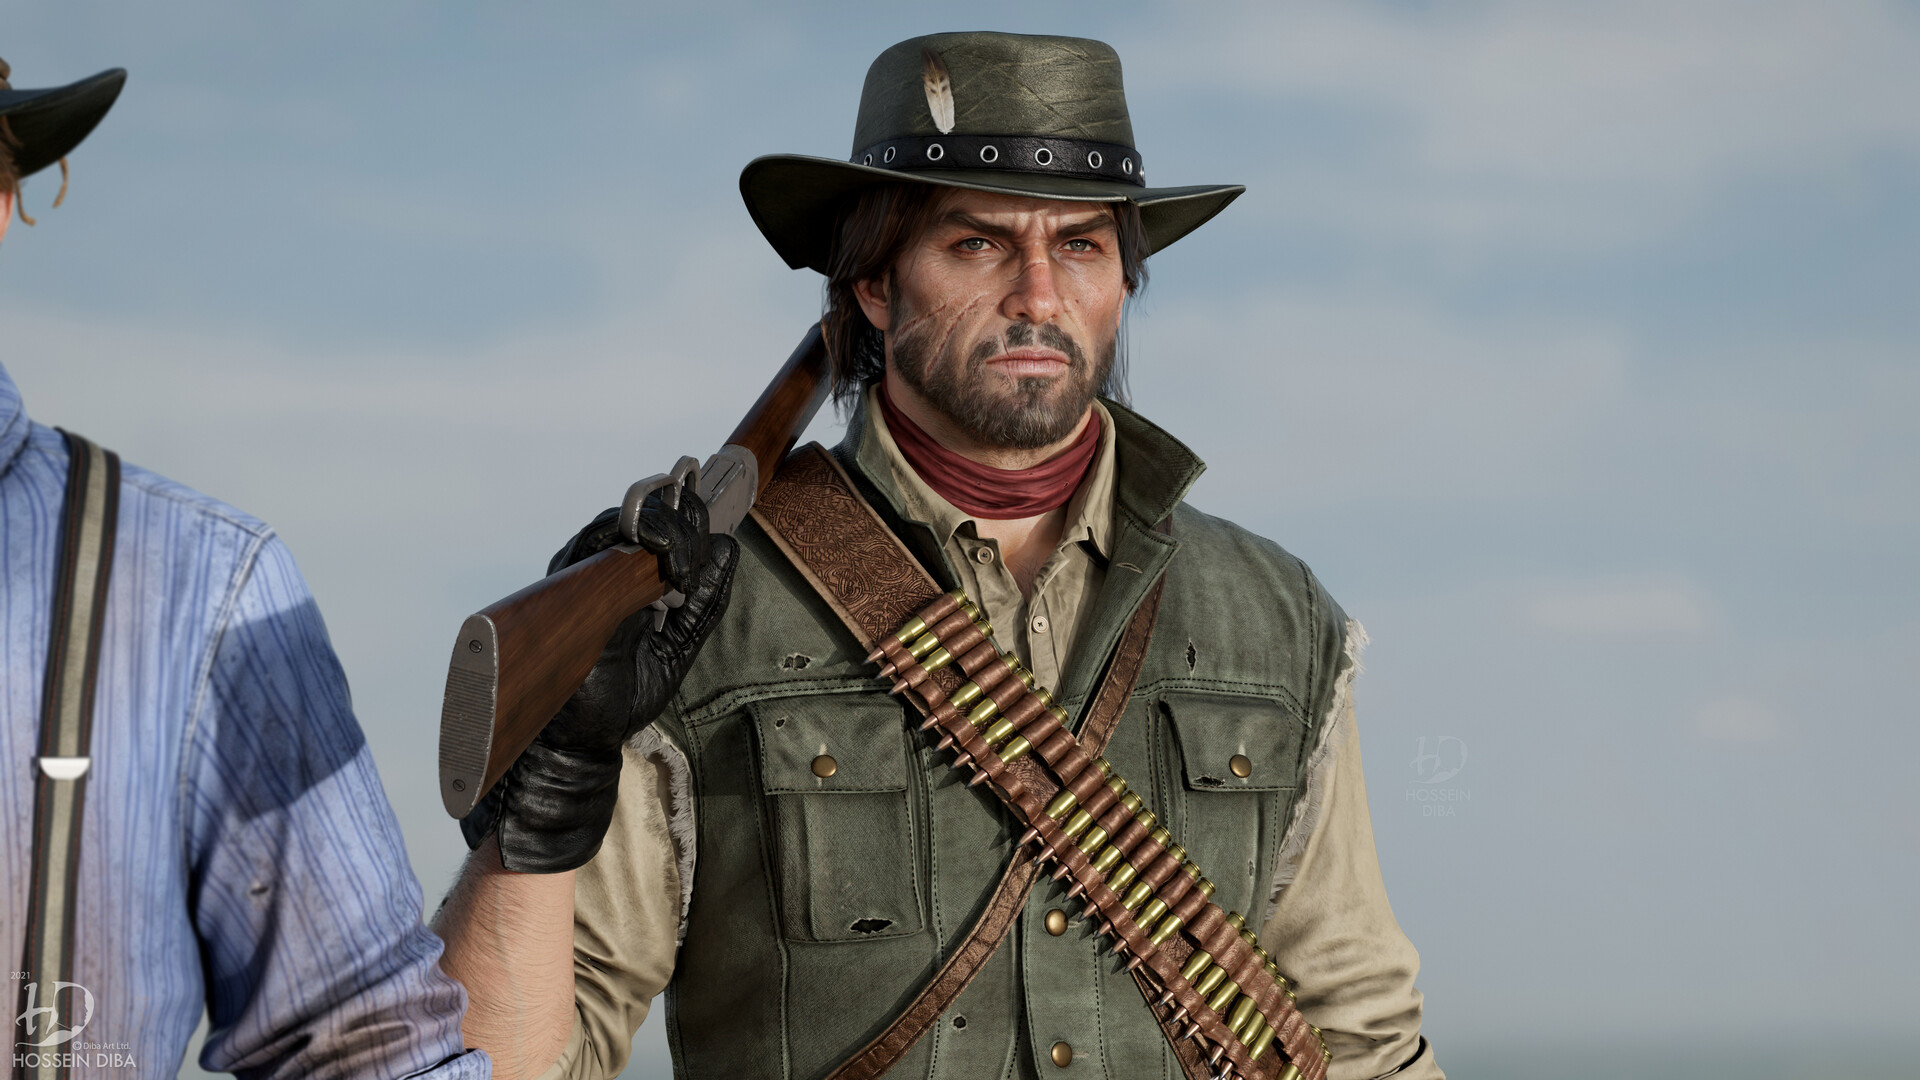 Next-Gen Arthur Morgan From Red Dead Redemption 2 By Hossein Diba